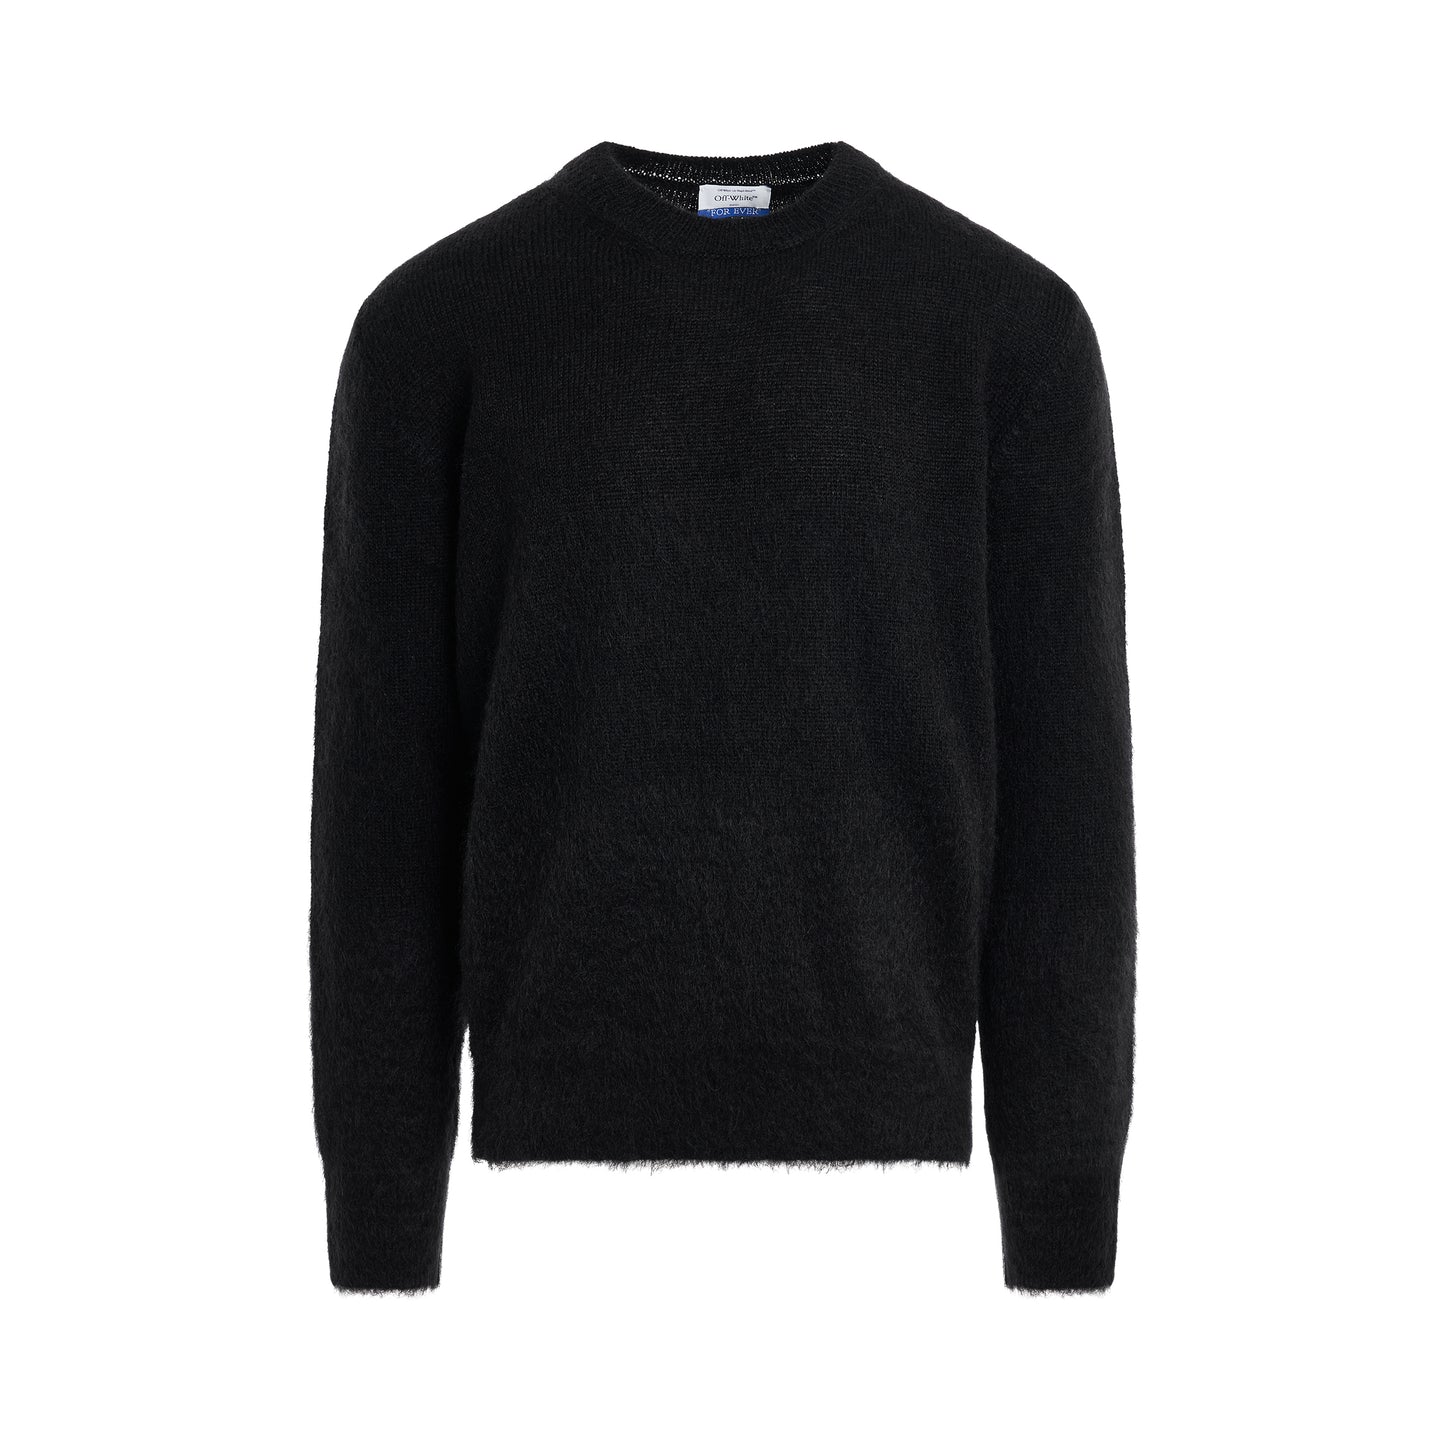 Mohair Arrow Knit Sweater in Black/Cream